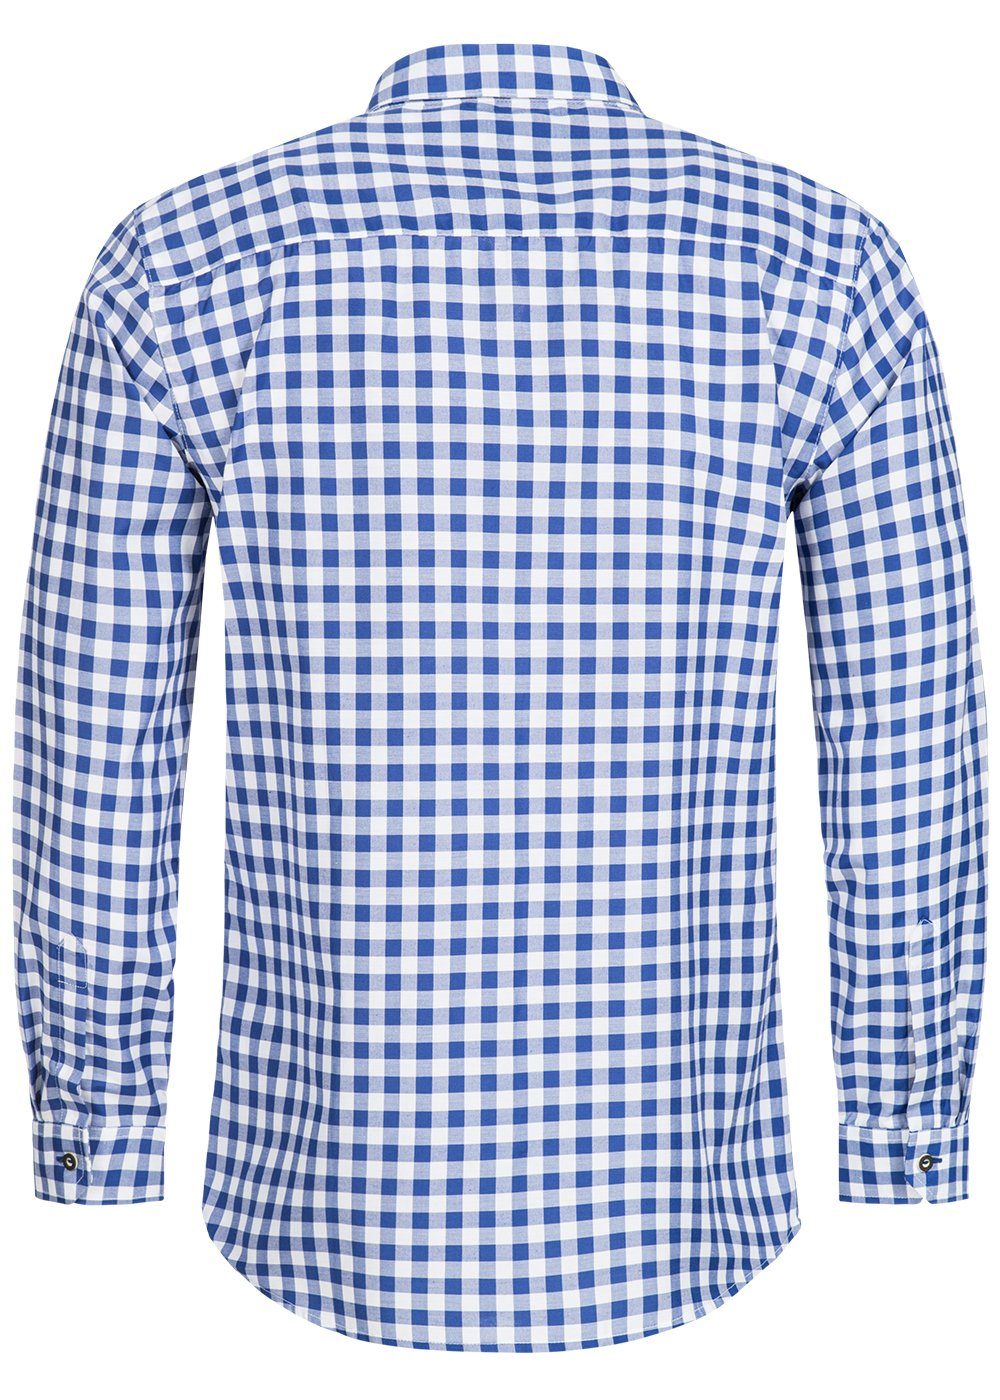 Stockerpoint Trachtenhemd Trachtenhemd OC-Franzl, Blau kariert, Fit modern